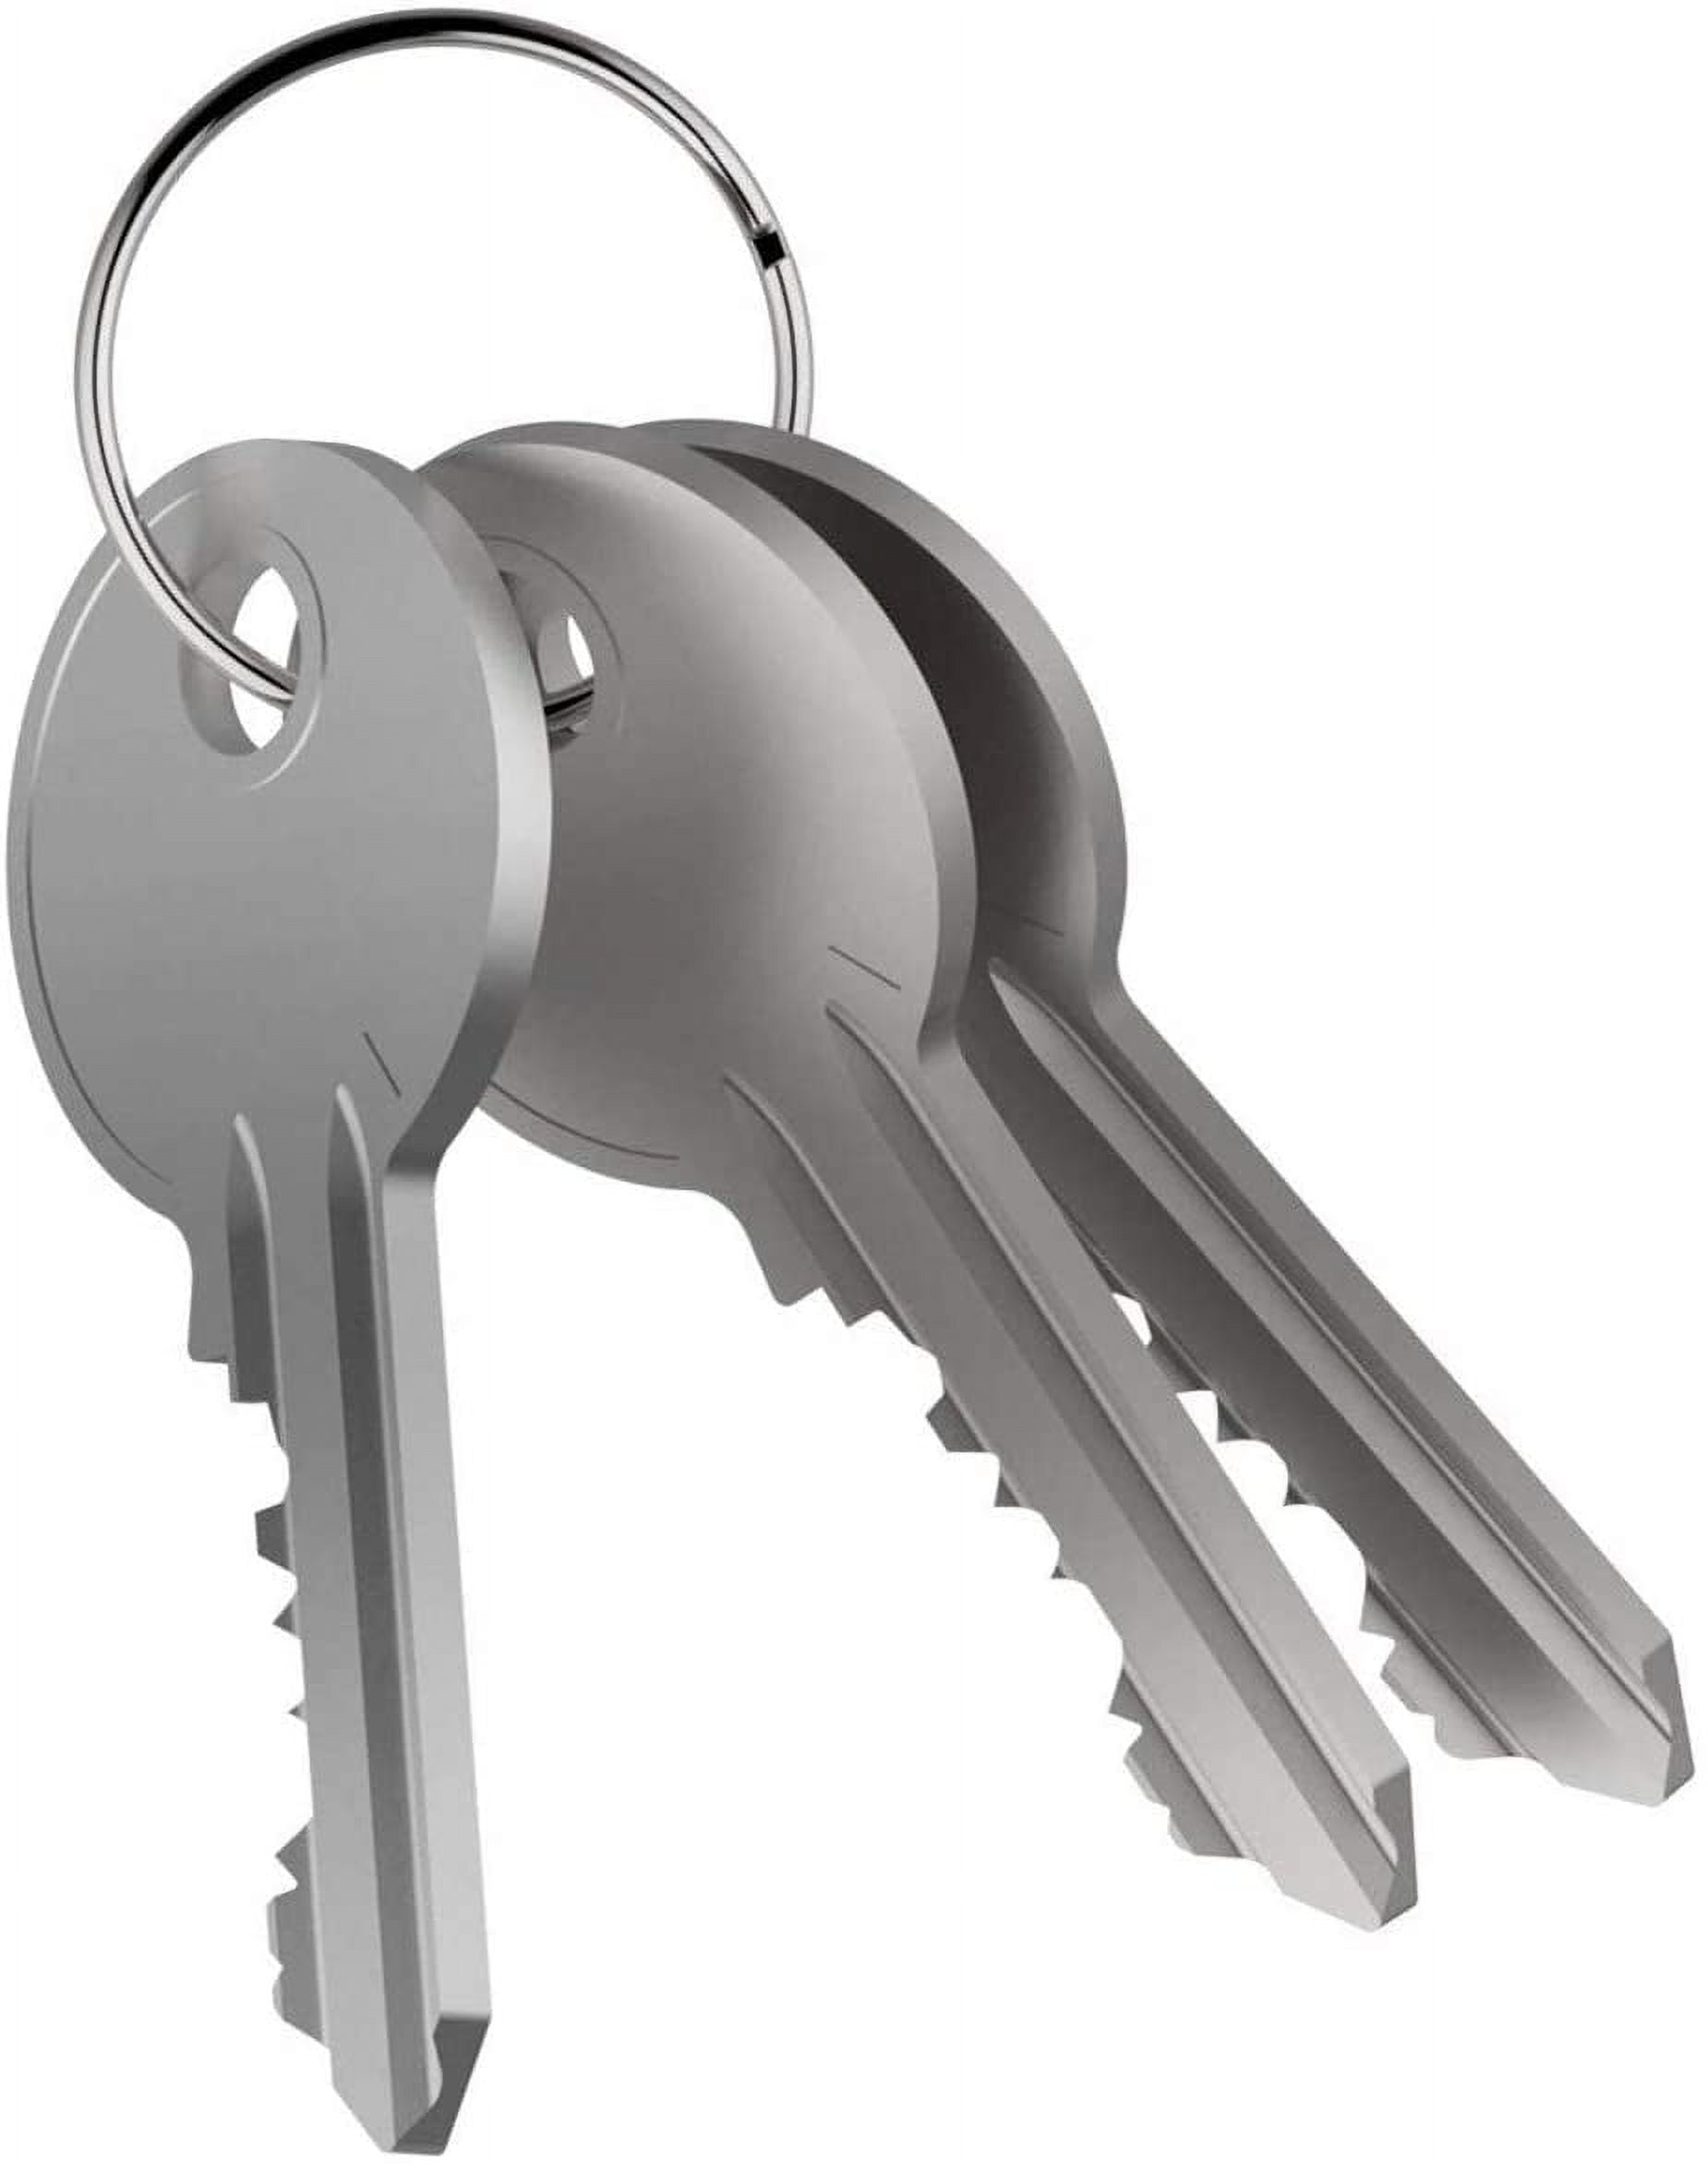 HeeYaa Flat Key Rings 10 Pieces 1 inches Flat Key Rings Metal Keychain  Rings Split Keyrings Flat O Ring for Home Car Office Keys Attachment(Black)